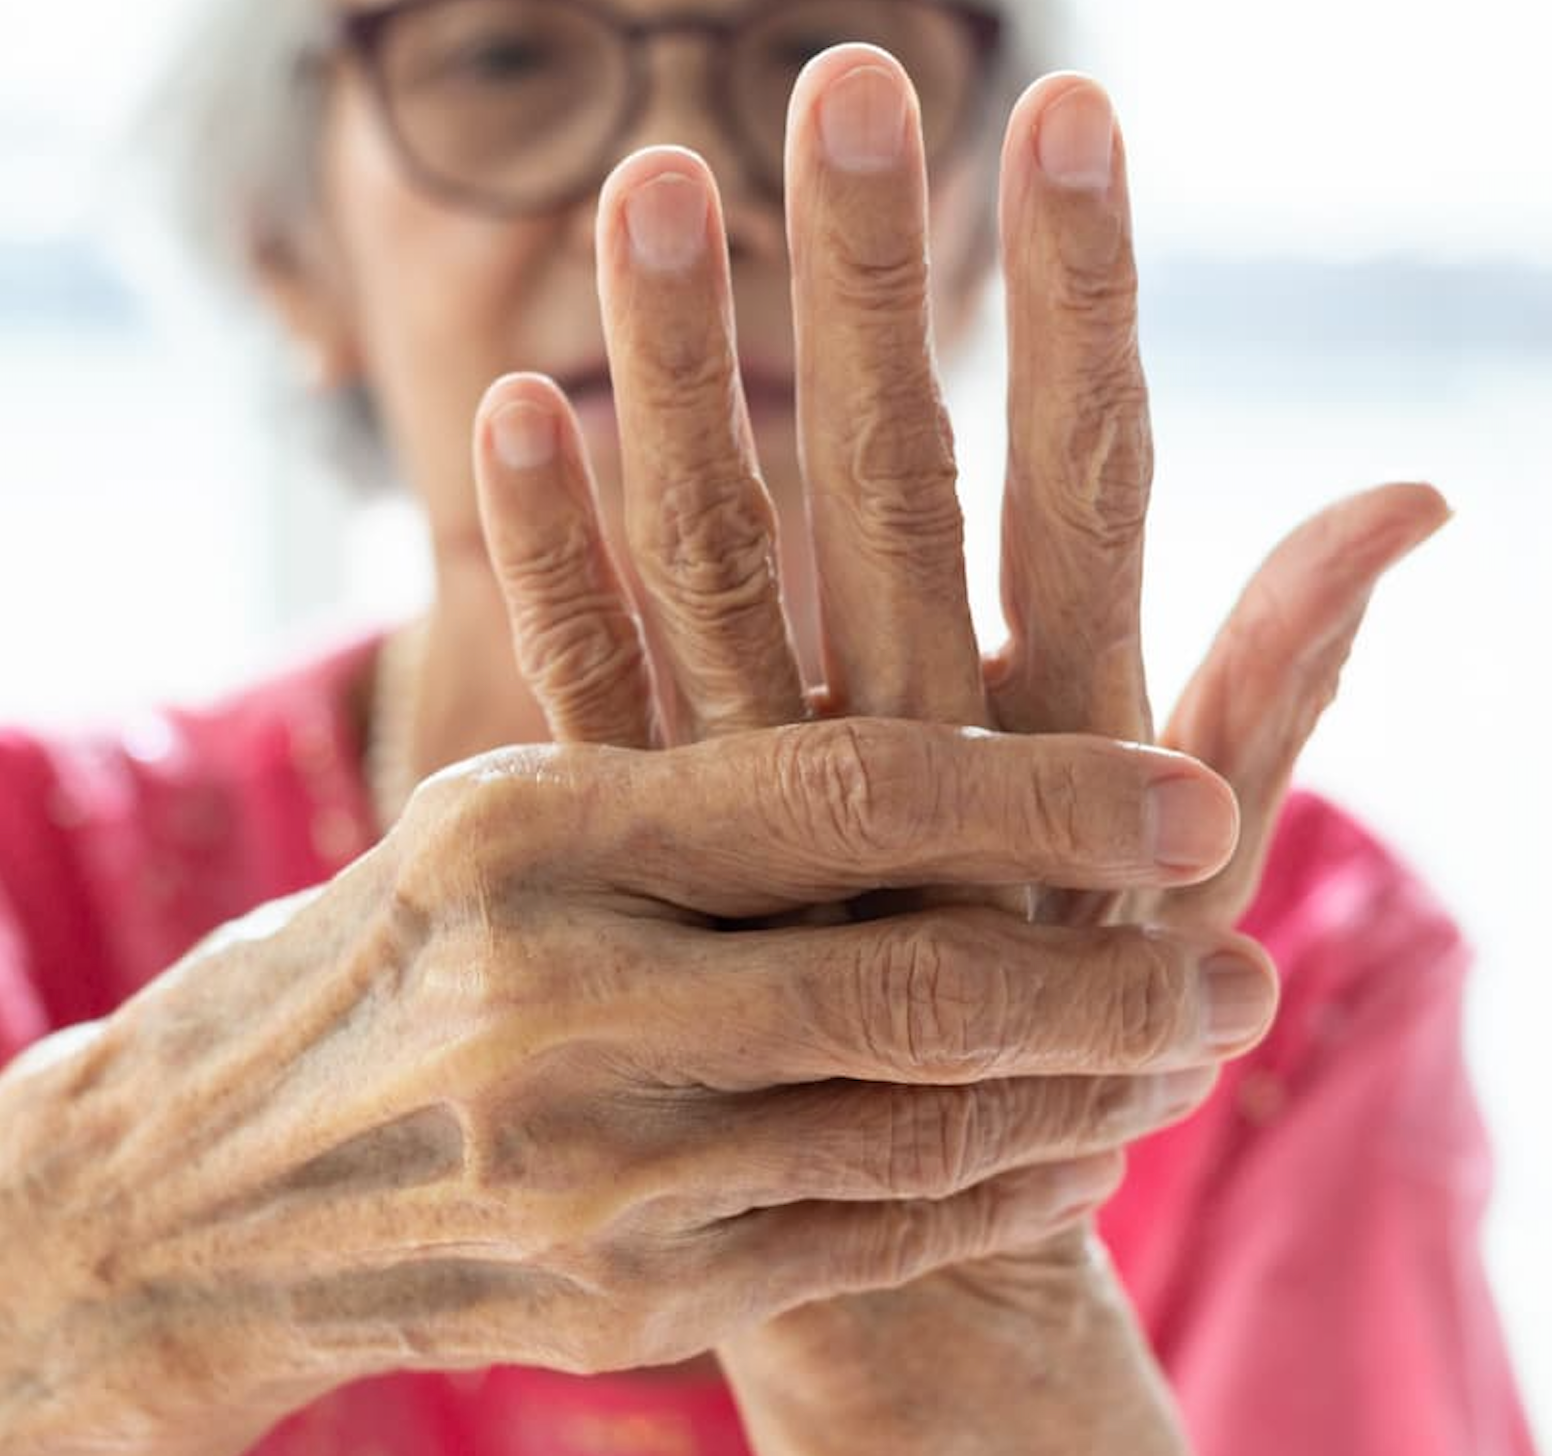 Woman holding hand in pain | Image Credit: Adobe Stock/Satjawat